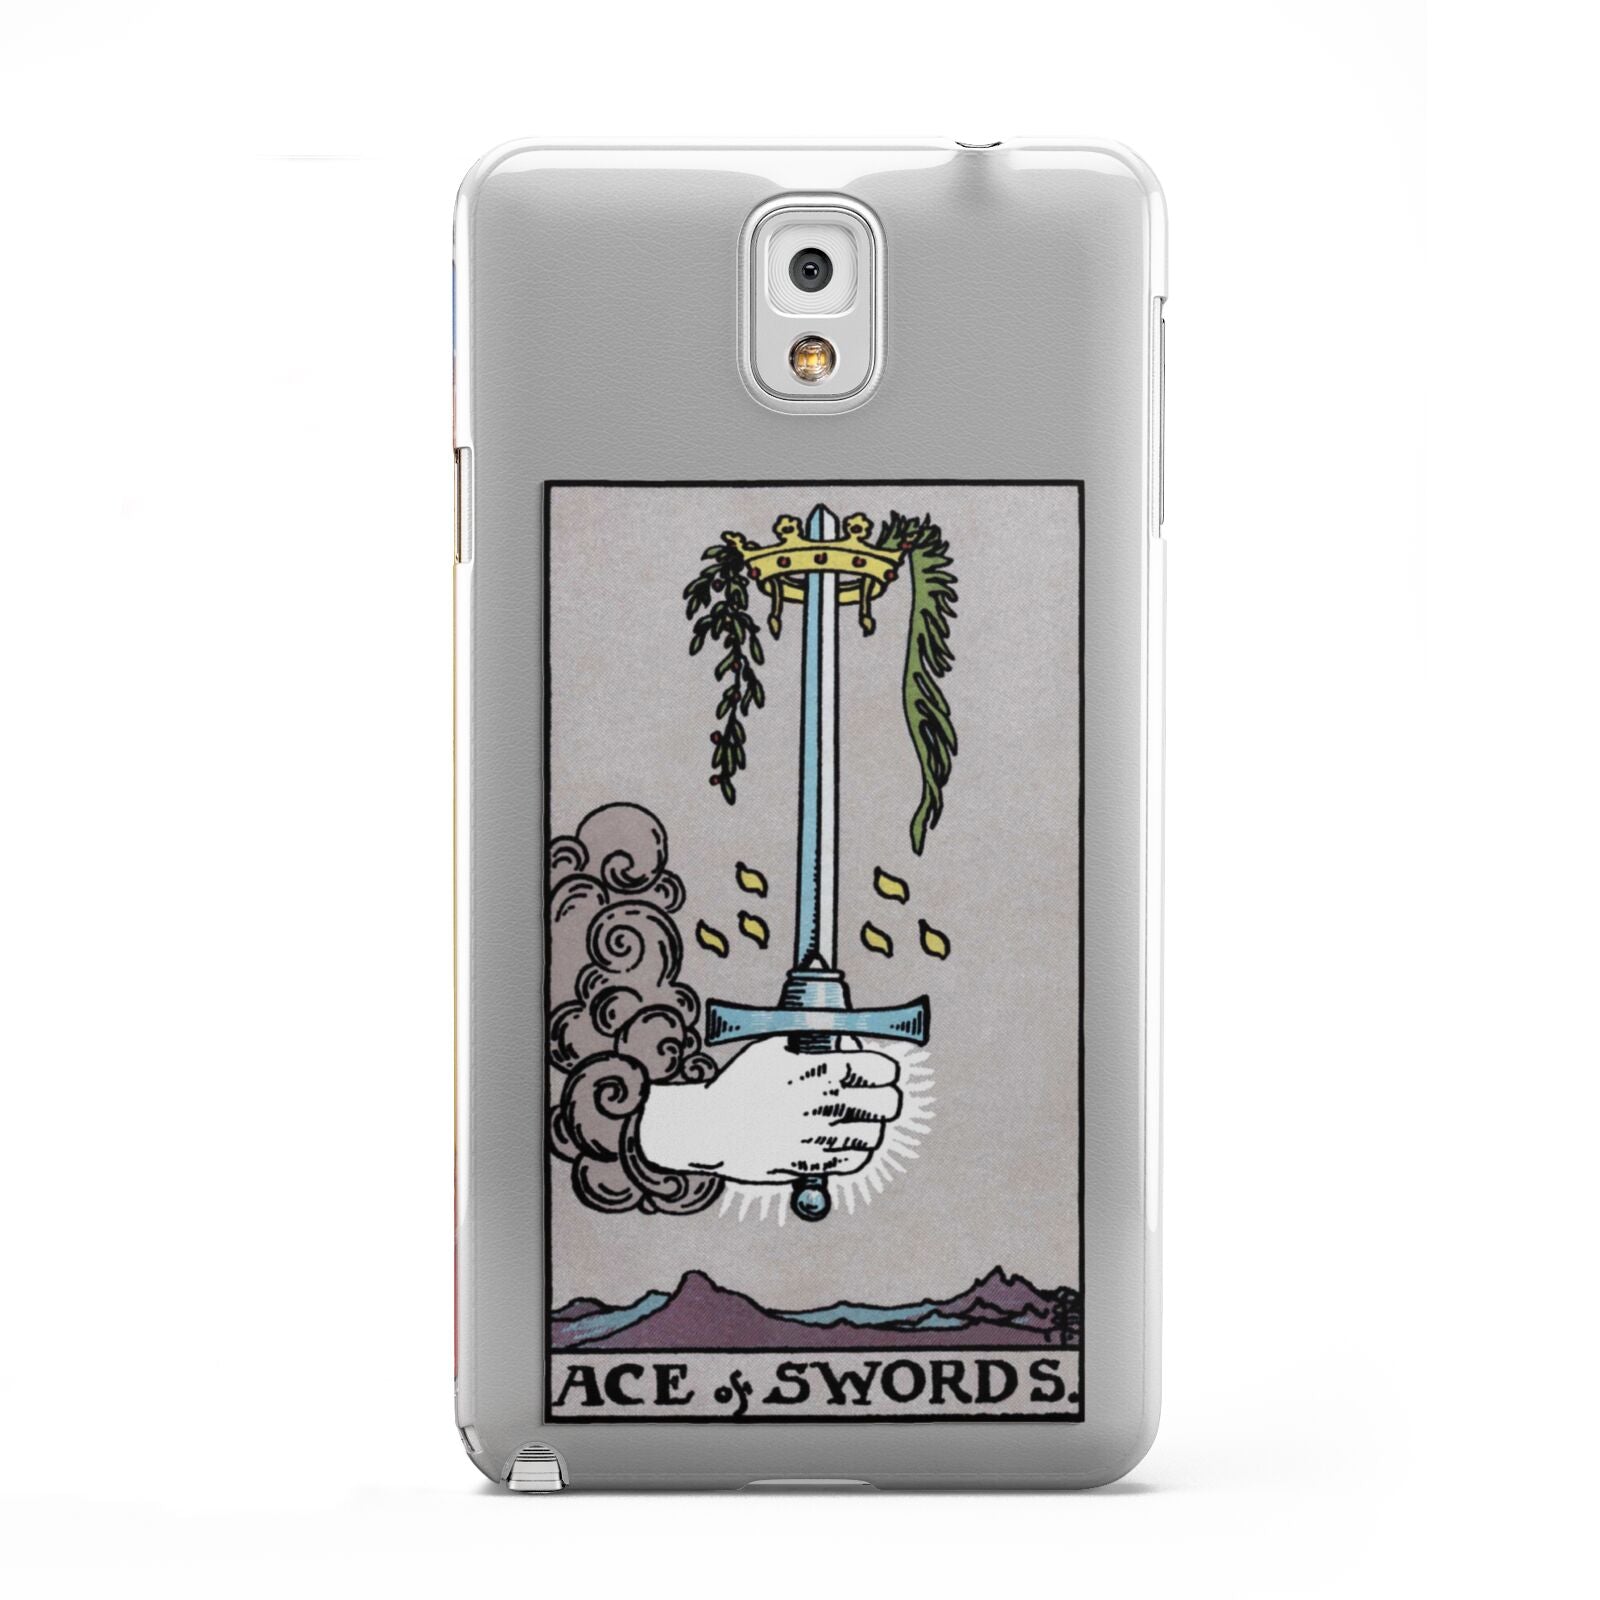 Ace of Swords Tarot Card Samsung Galaxy Note 3 Case